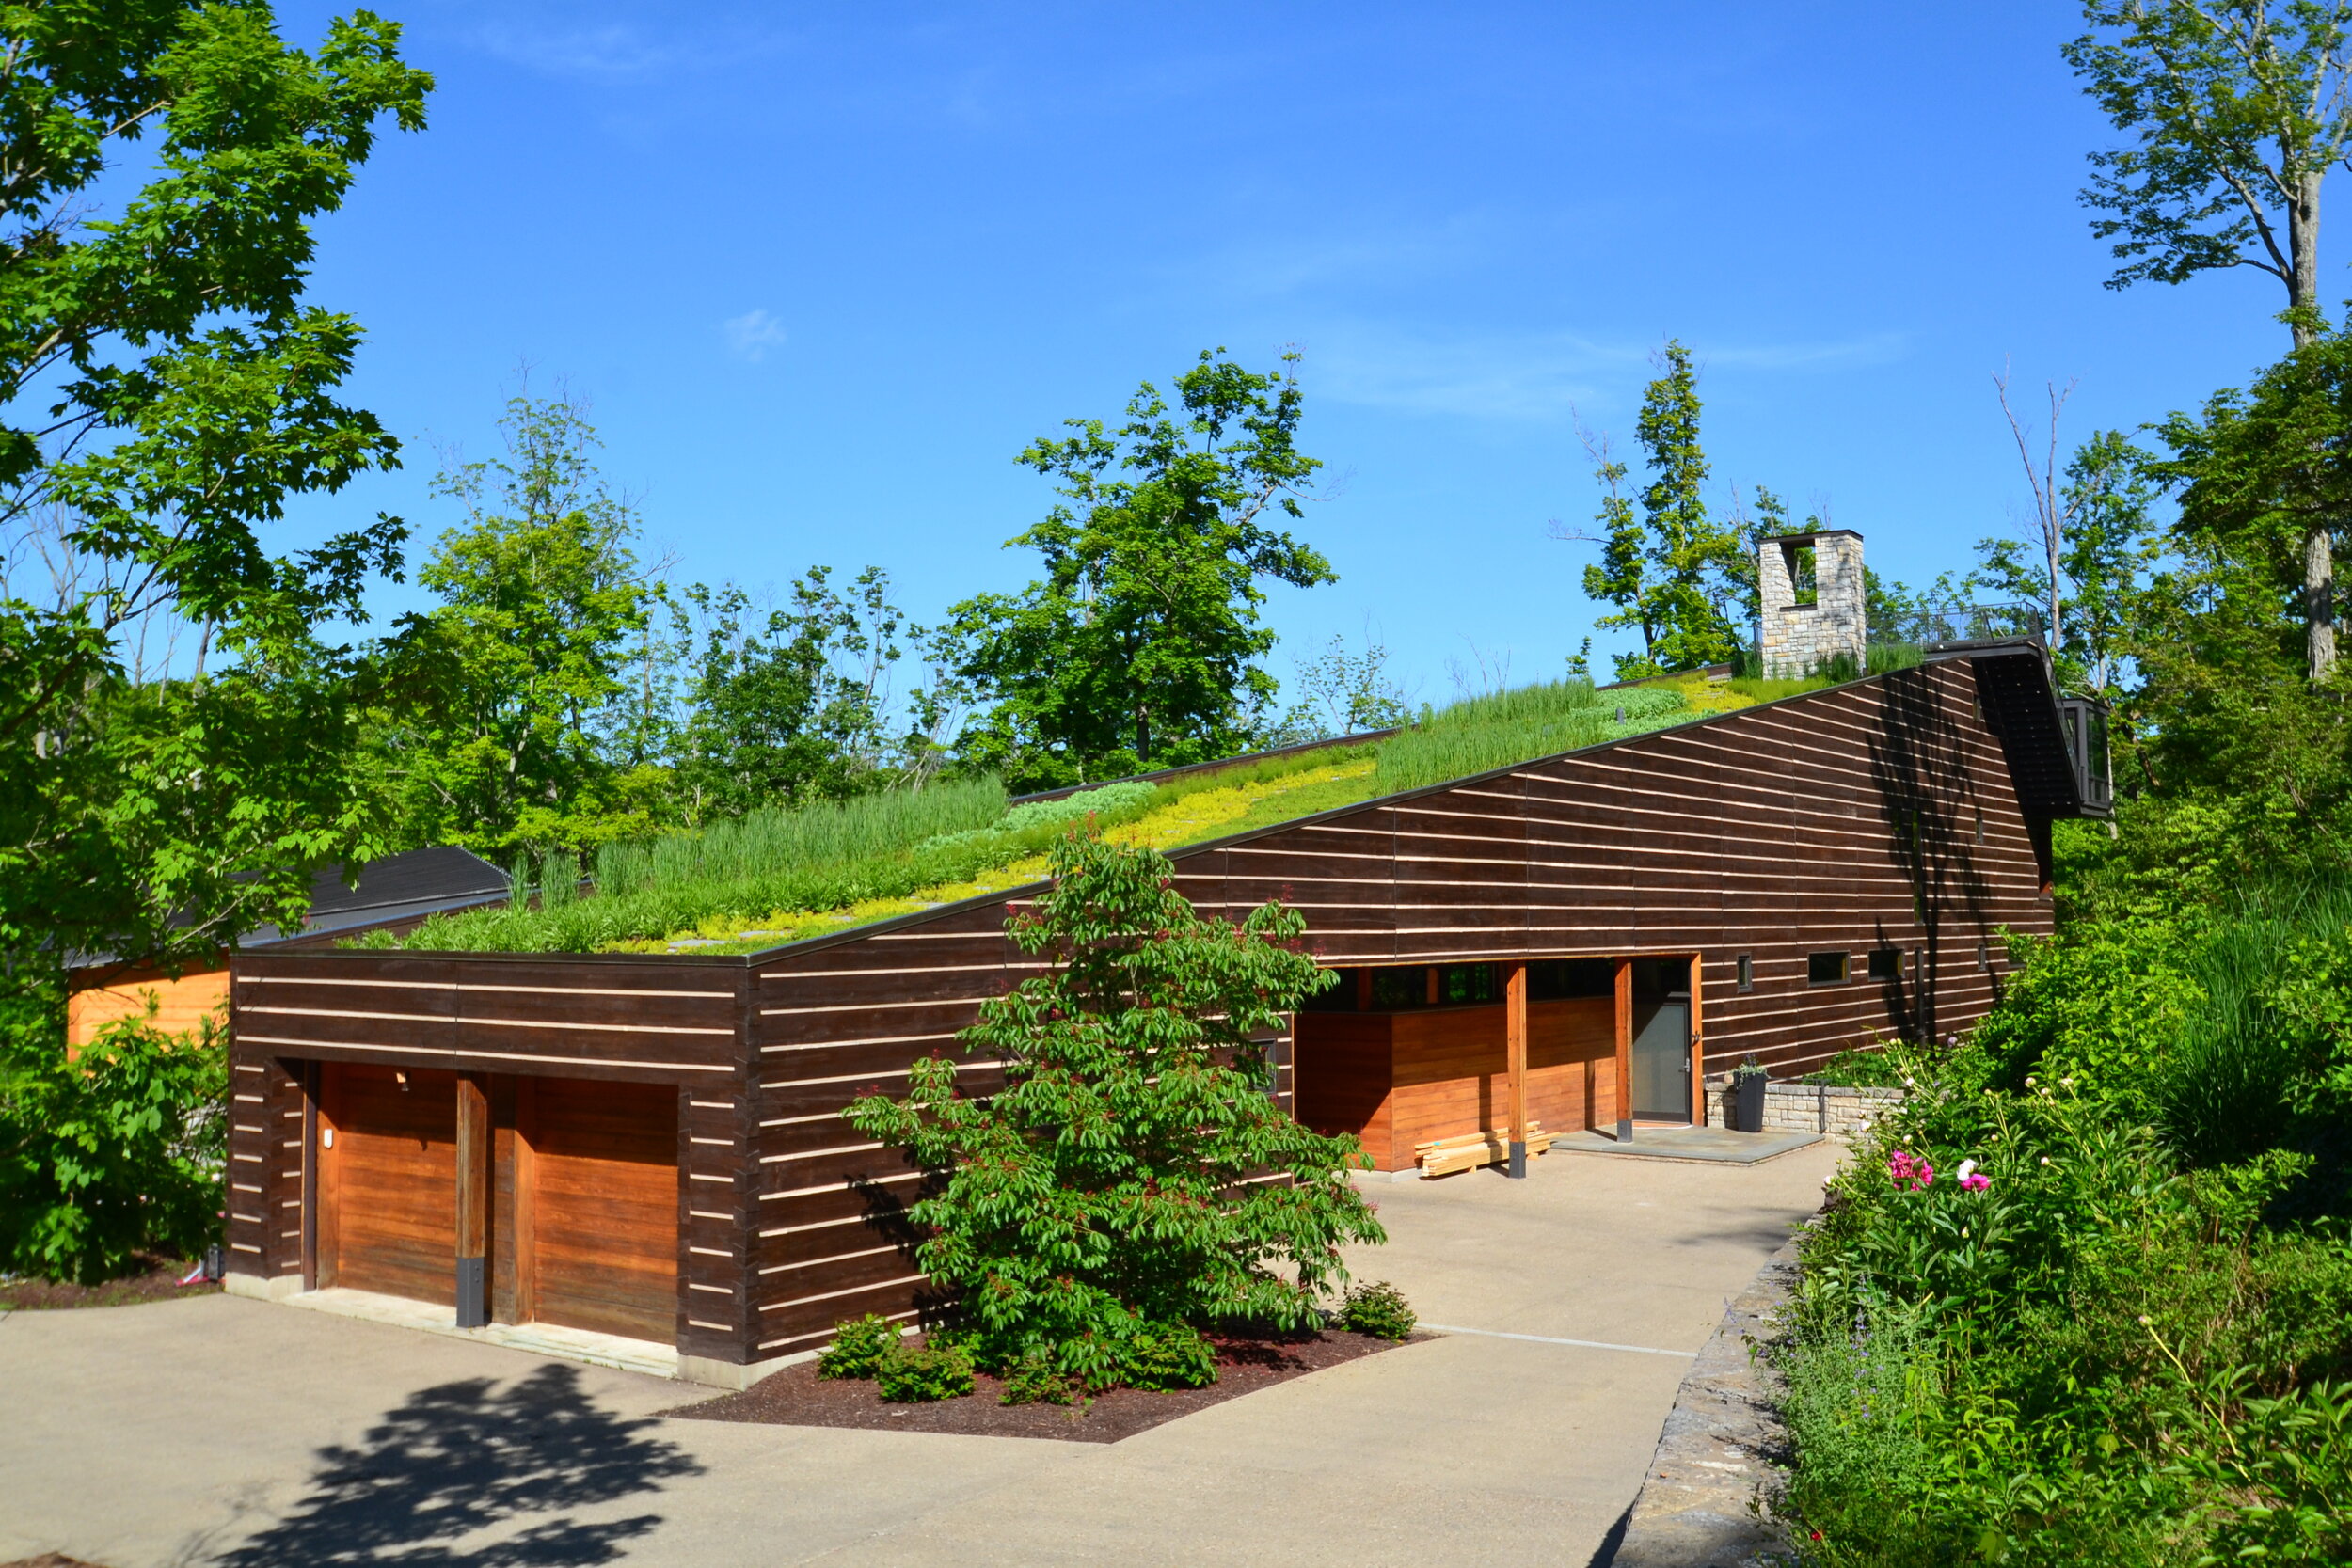 23-stride-studios-indian-hill-walnut-woods-green-roof.jpg